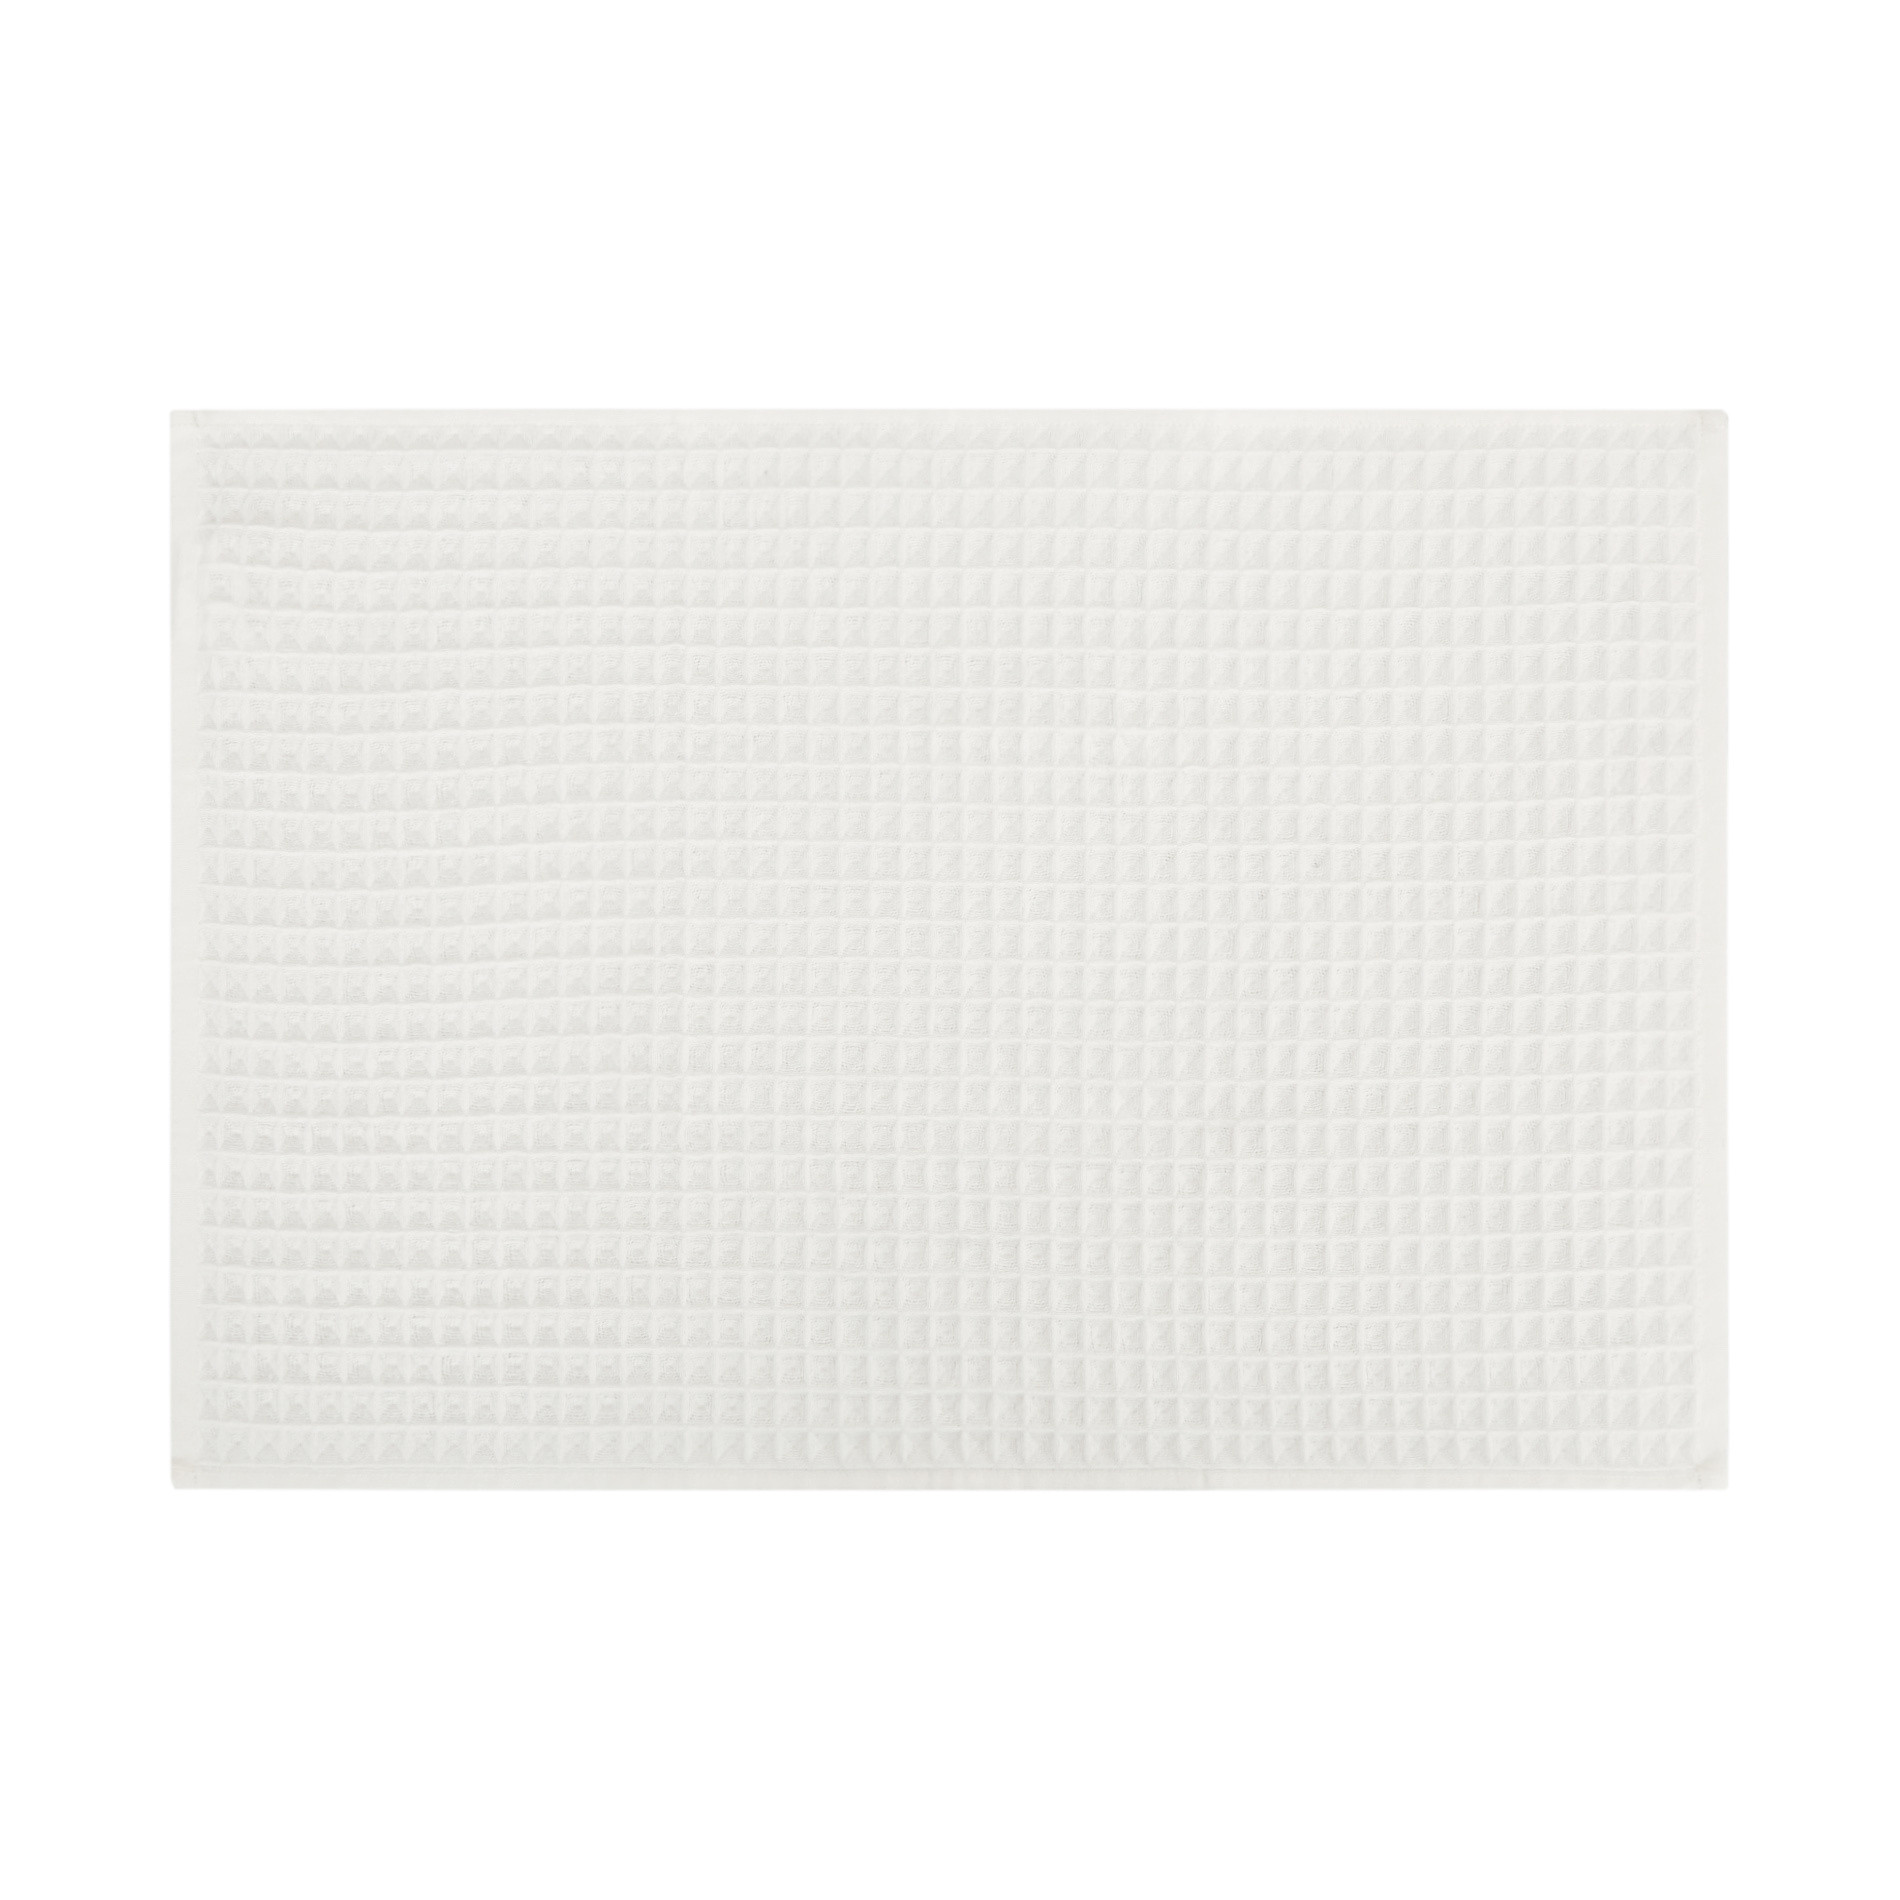 Set 2 asciugamani puro cotone nido d'ape tinta unita, Bianco, large image number 1